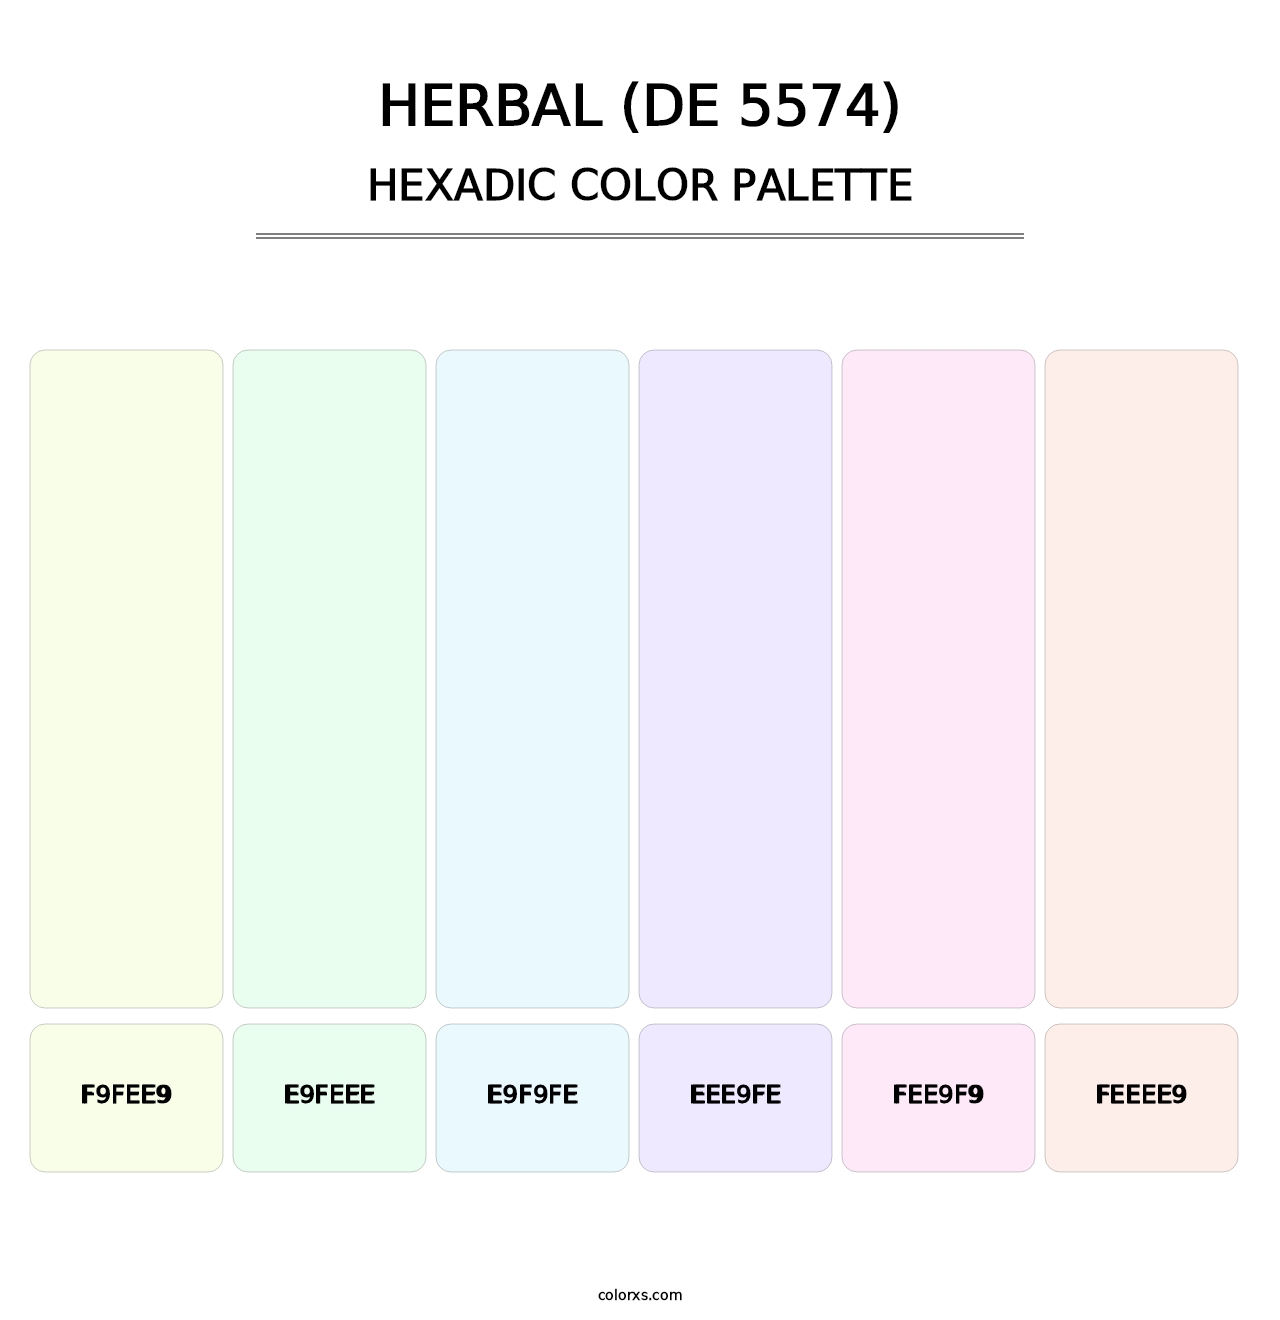 Herbal (DE 5574) - Hexadic Color Palette